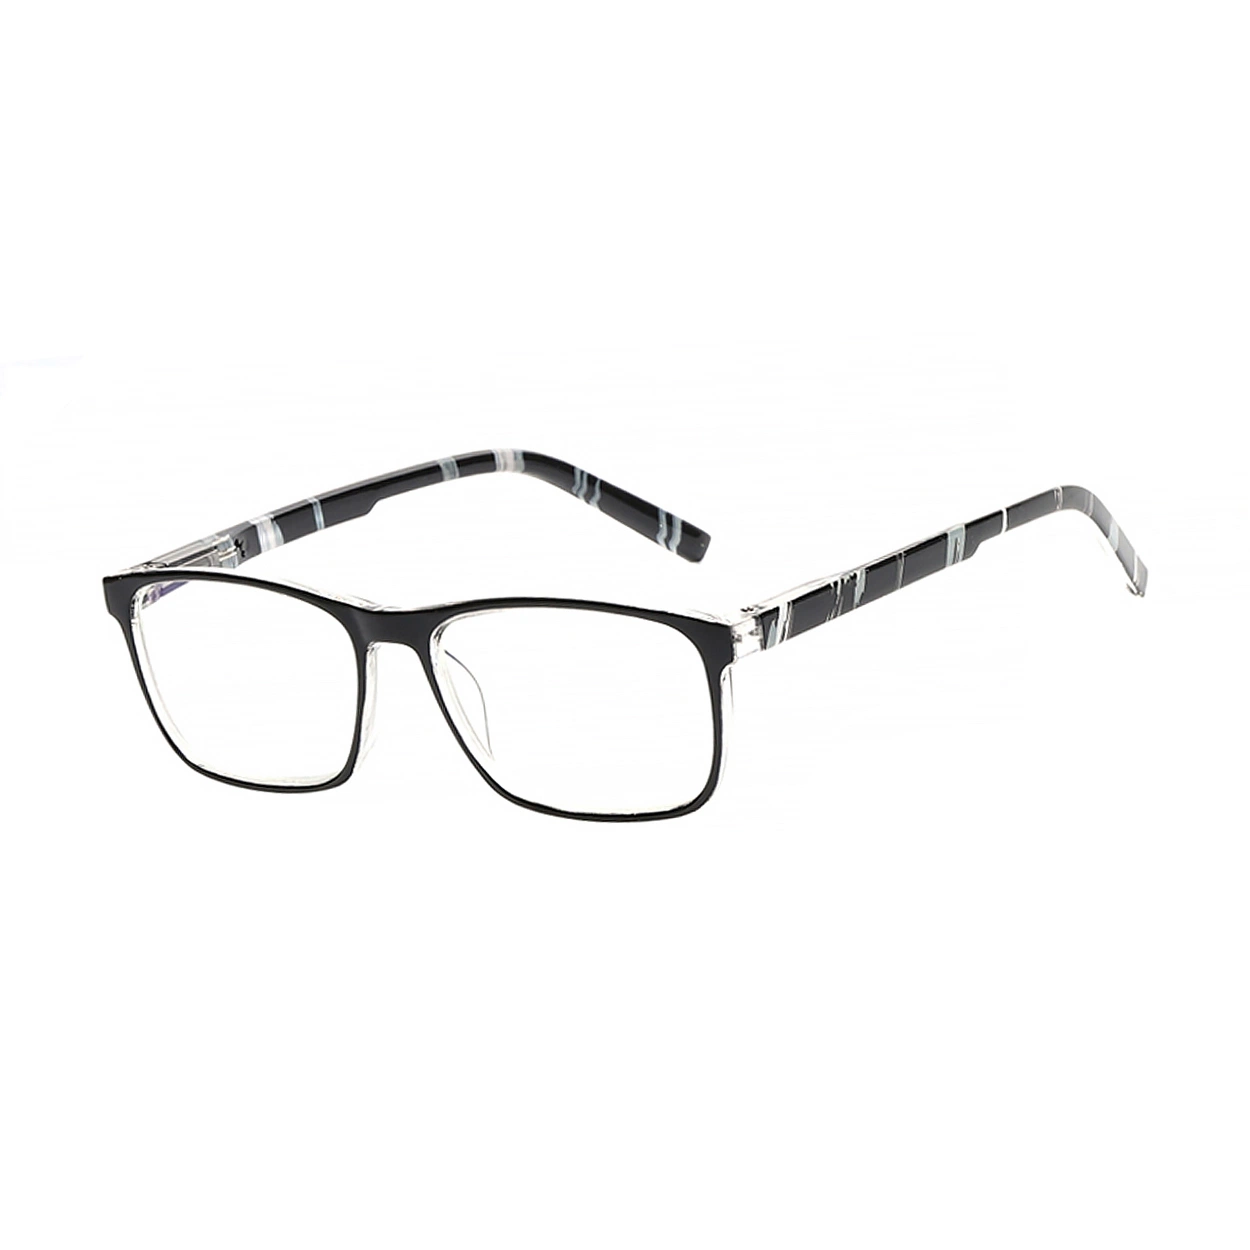 Meture Square Frame for Men Comfortable Spring Hinge Reading Glasses Manufacture